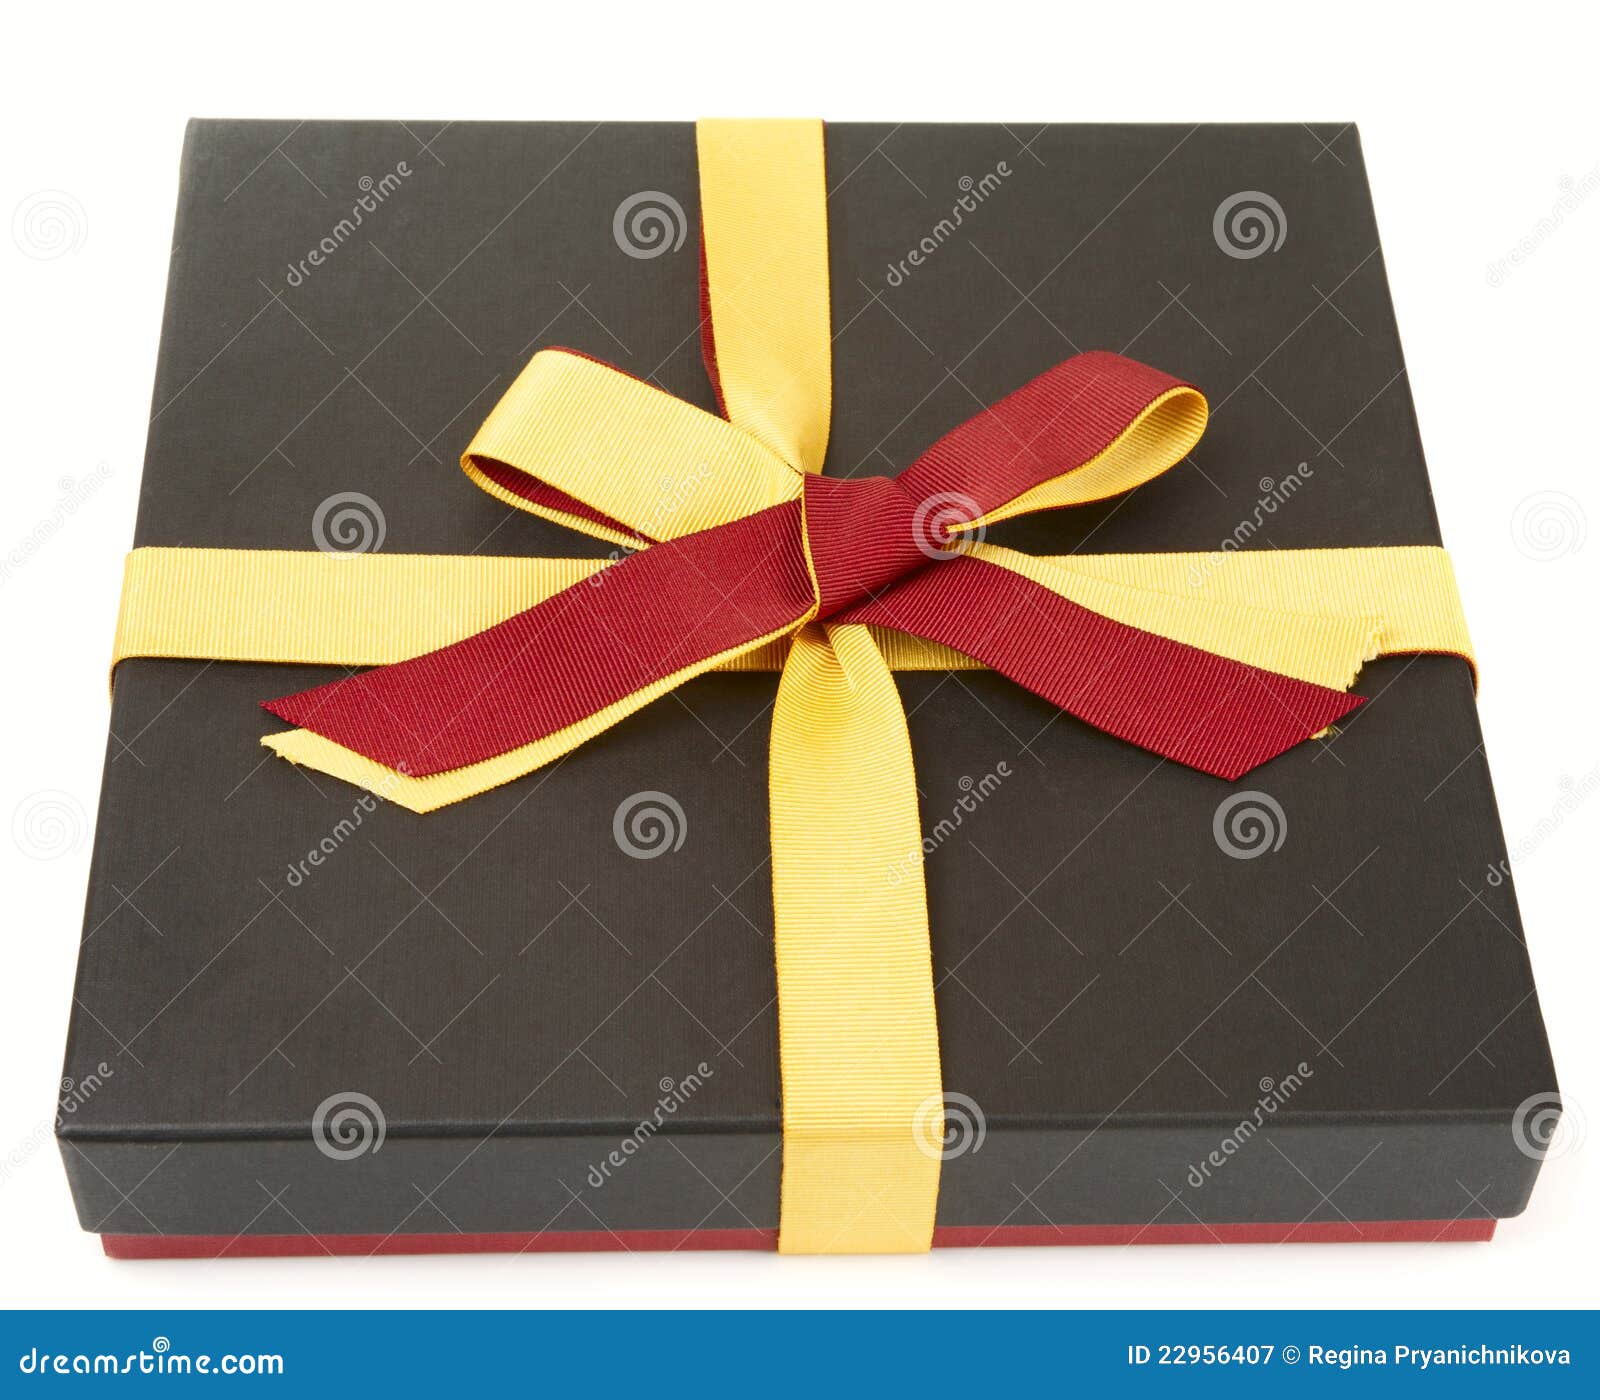 flat-cardboard-gift-box-isolated-22956407.jpg